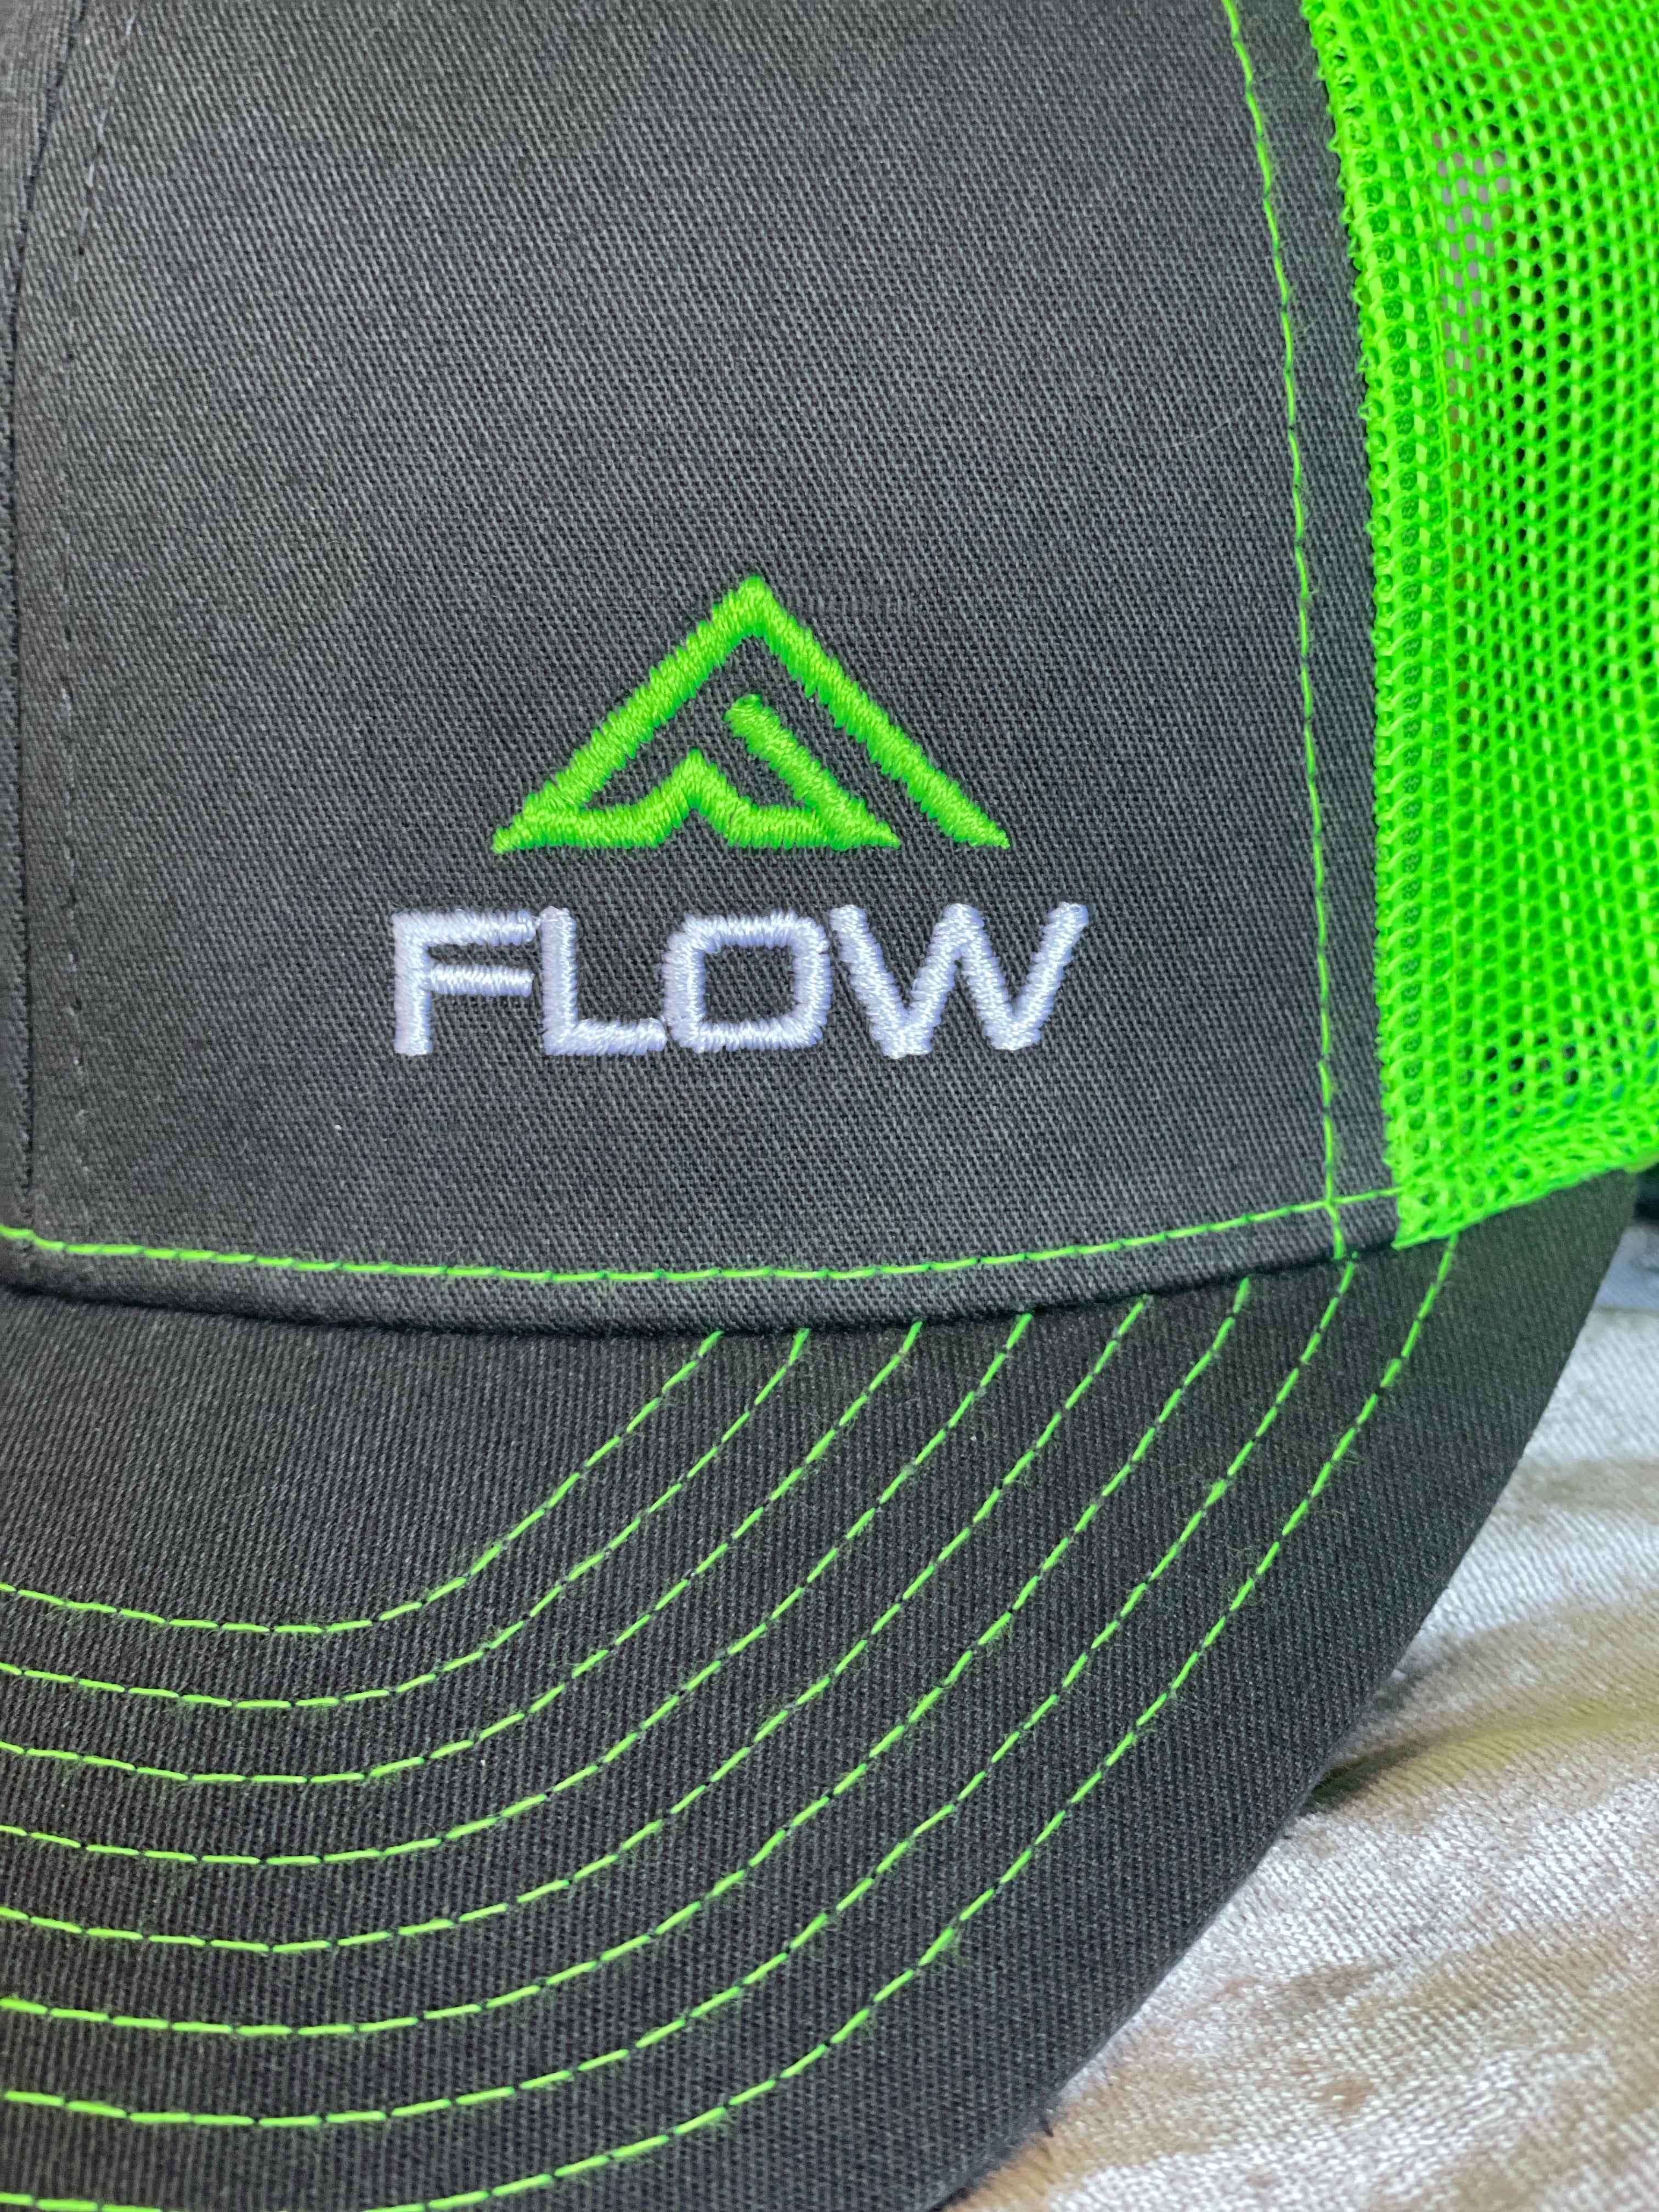 Flow Formulas Neon Green Trucker Hat